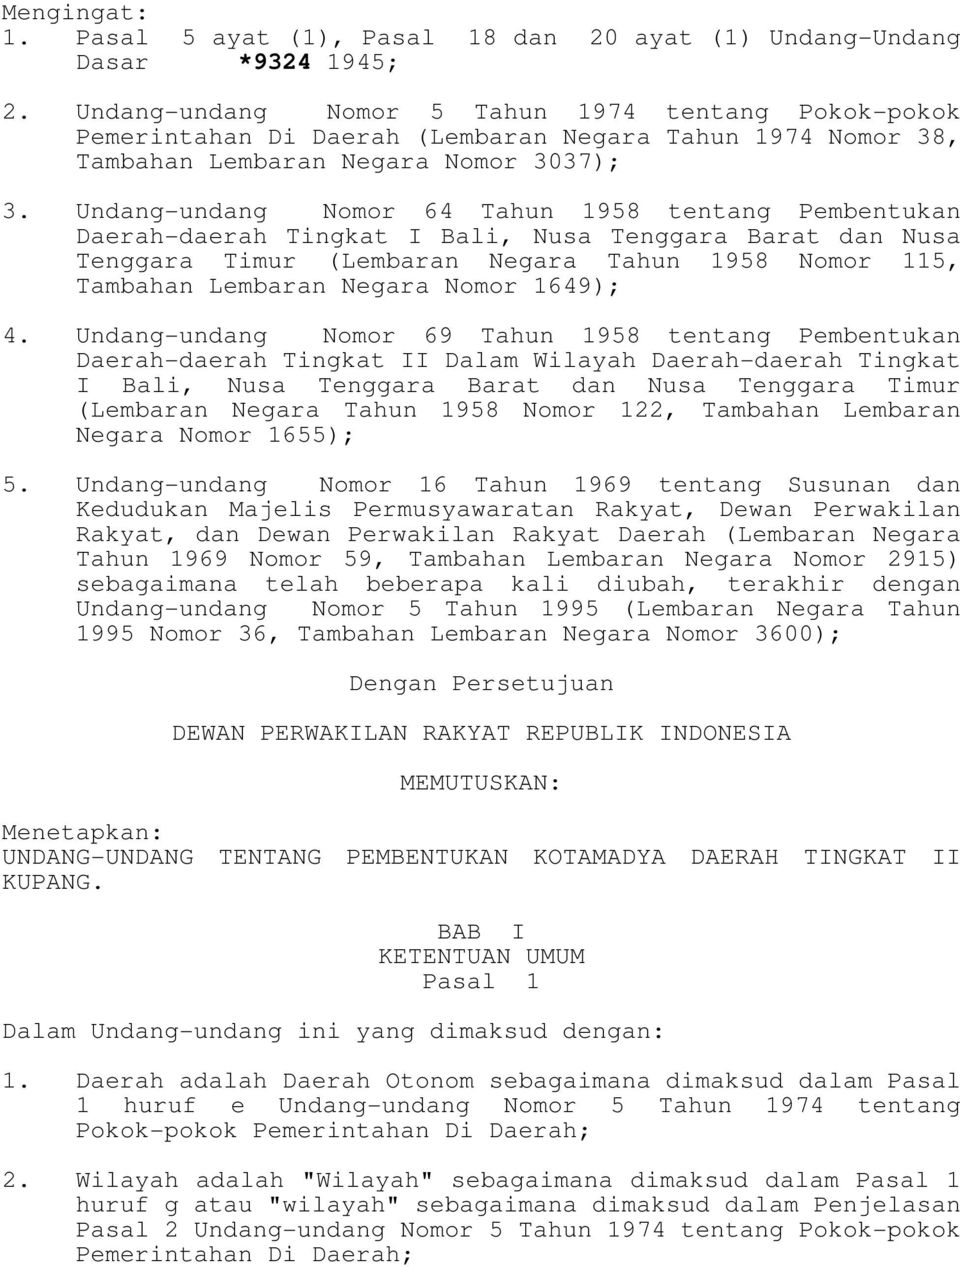 Undang-undang Nomor 64 Tahun 1958 tentang Pembentukan Daerah-daerah Tingkat I Bali, Nusa Tenggara Barat dan Nusa Tenggara Timur (Lembaran Negara Tahun 1958 Nomor 115, Tambahan Lembaran Negara Nomor